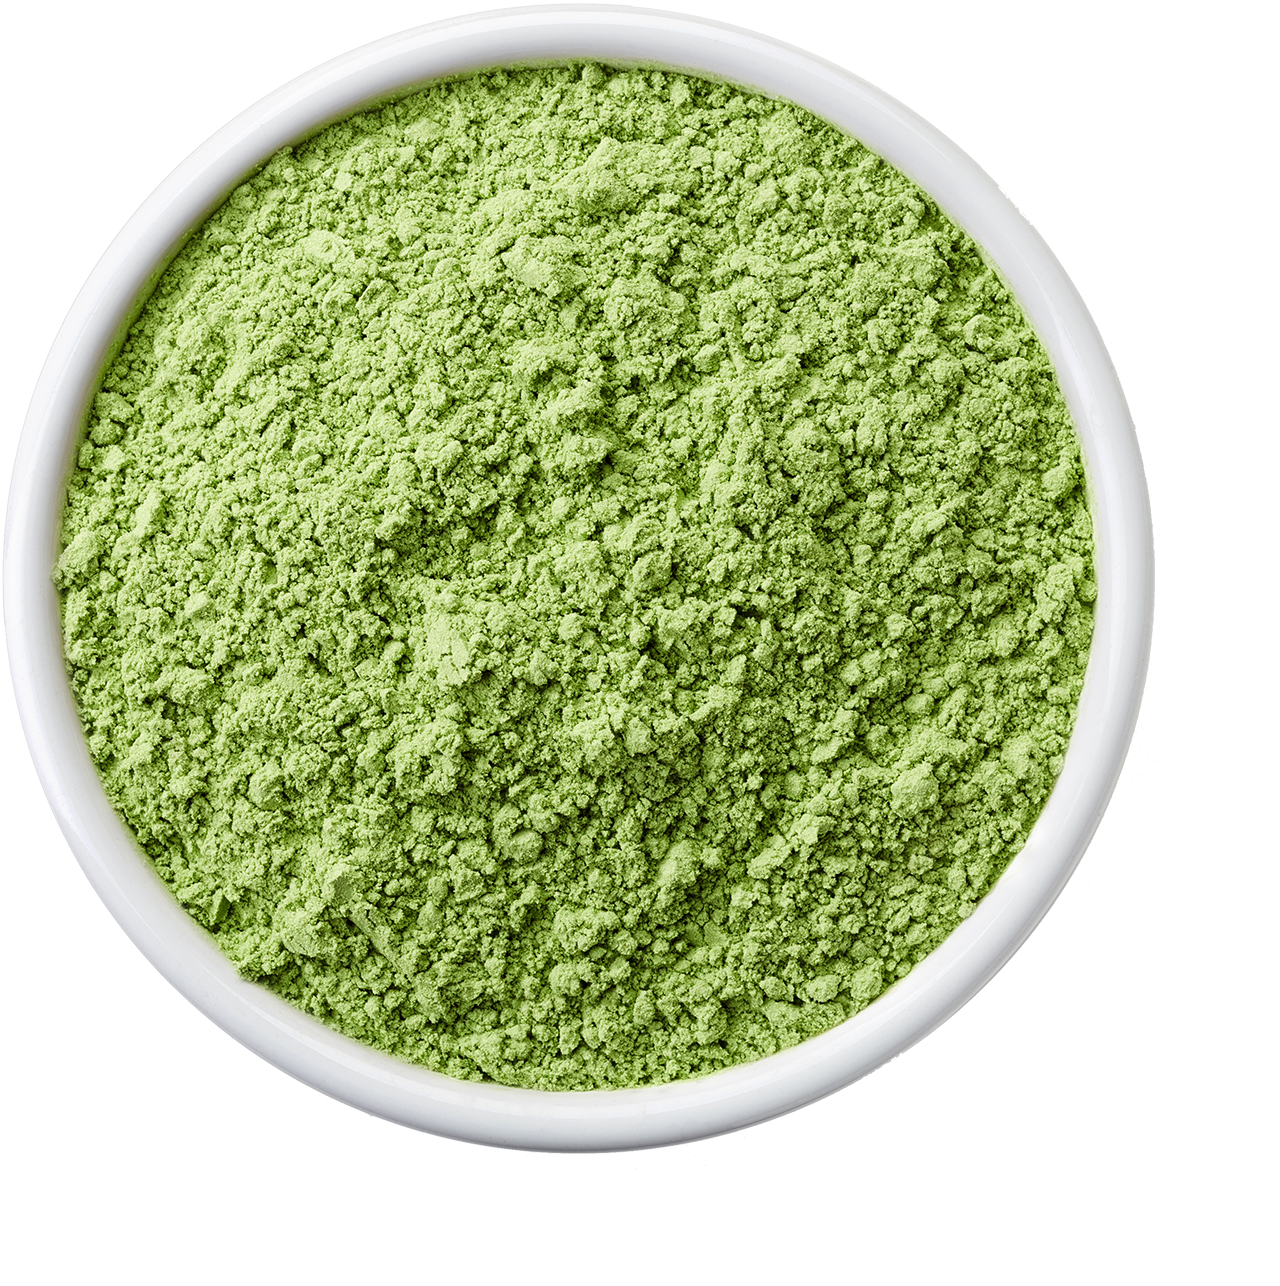 A Bowl Of Green Powder